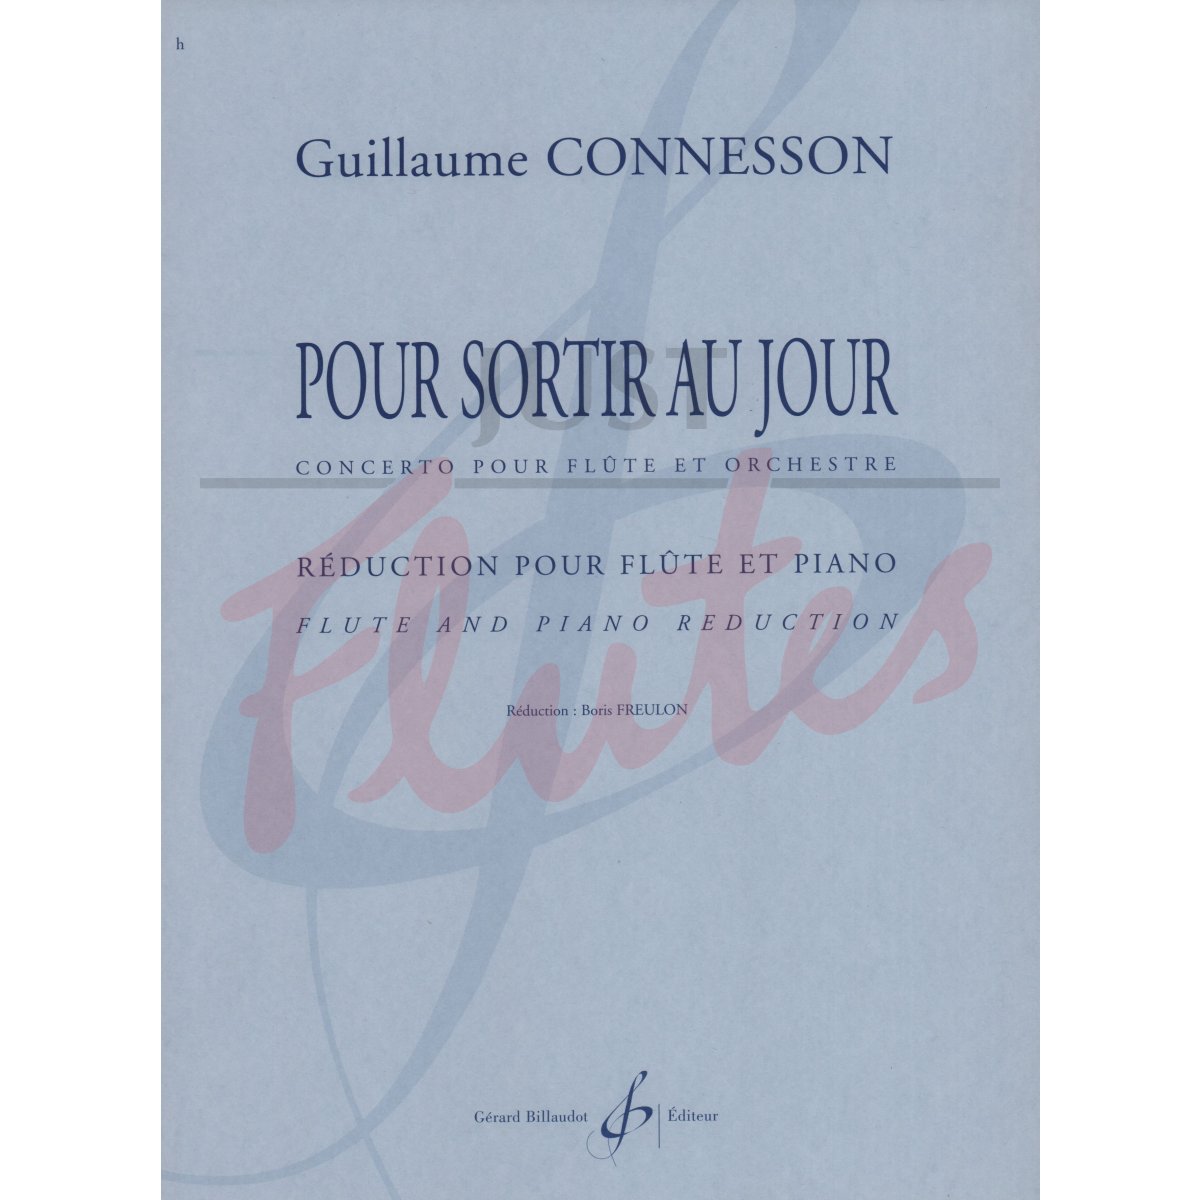 Pour Sortir au Jour: Concerto for Flute and Piano